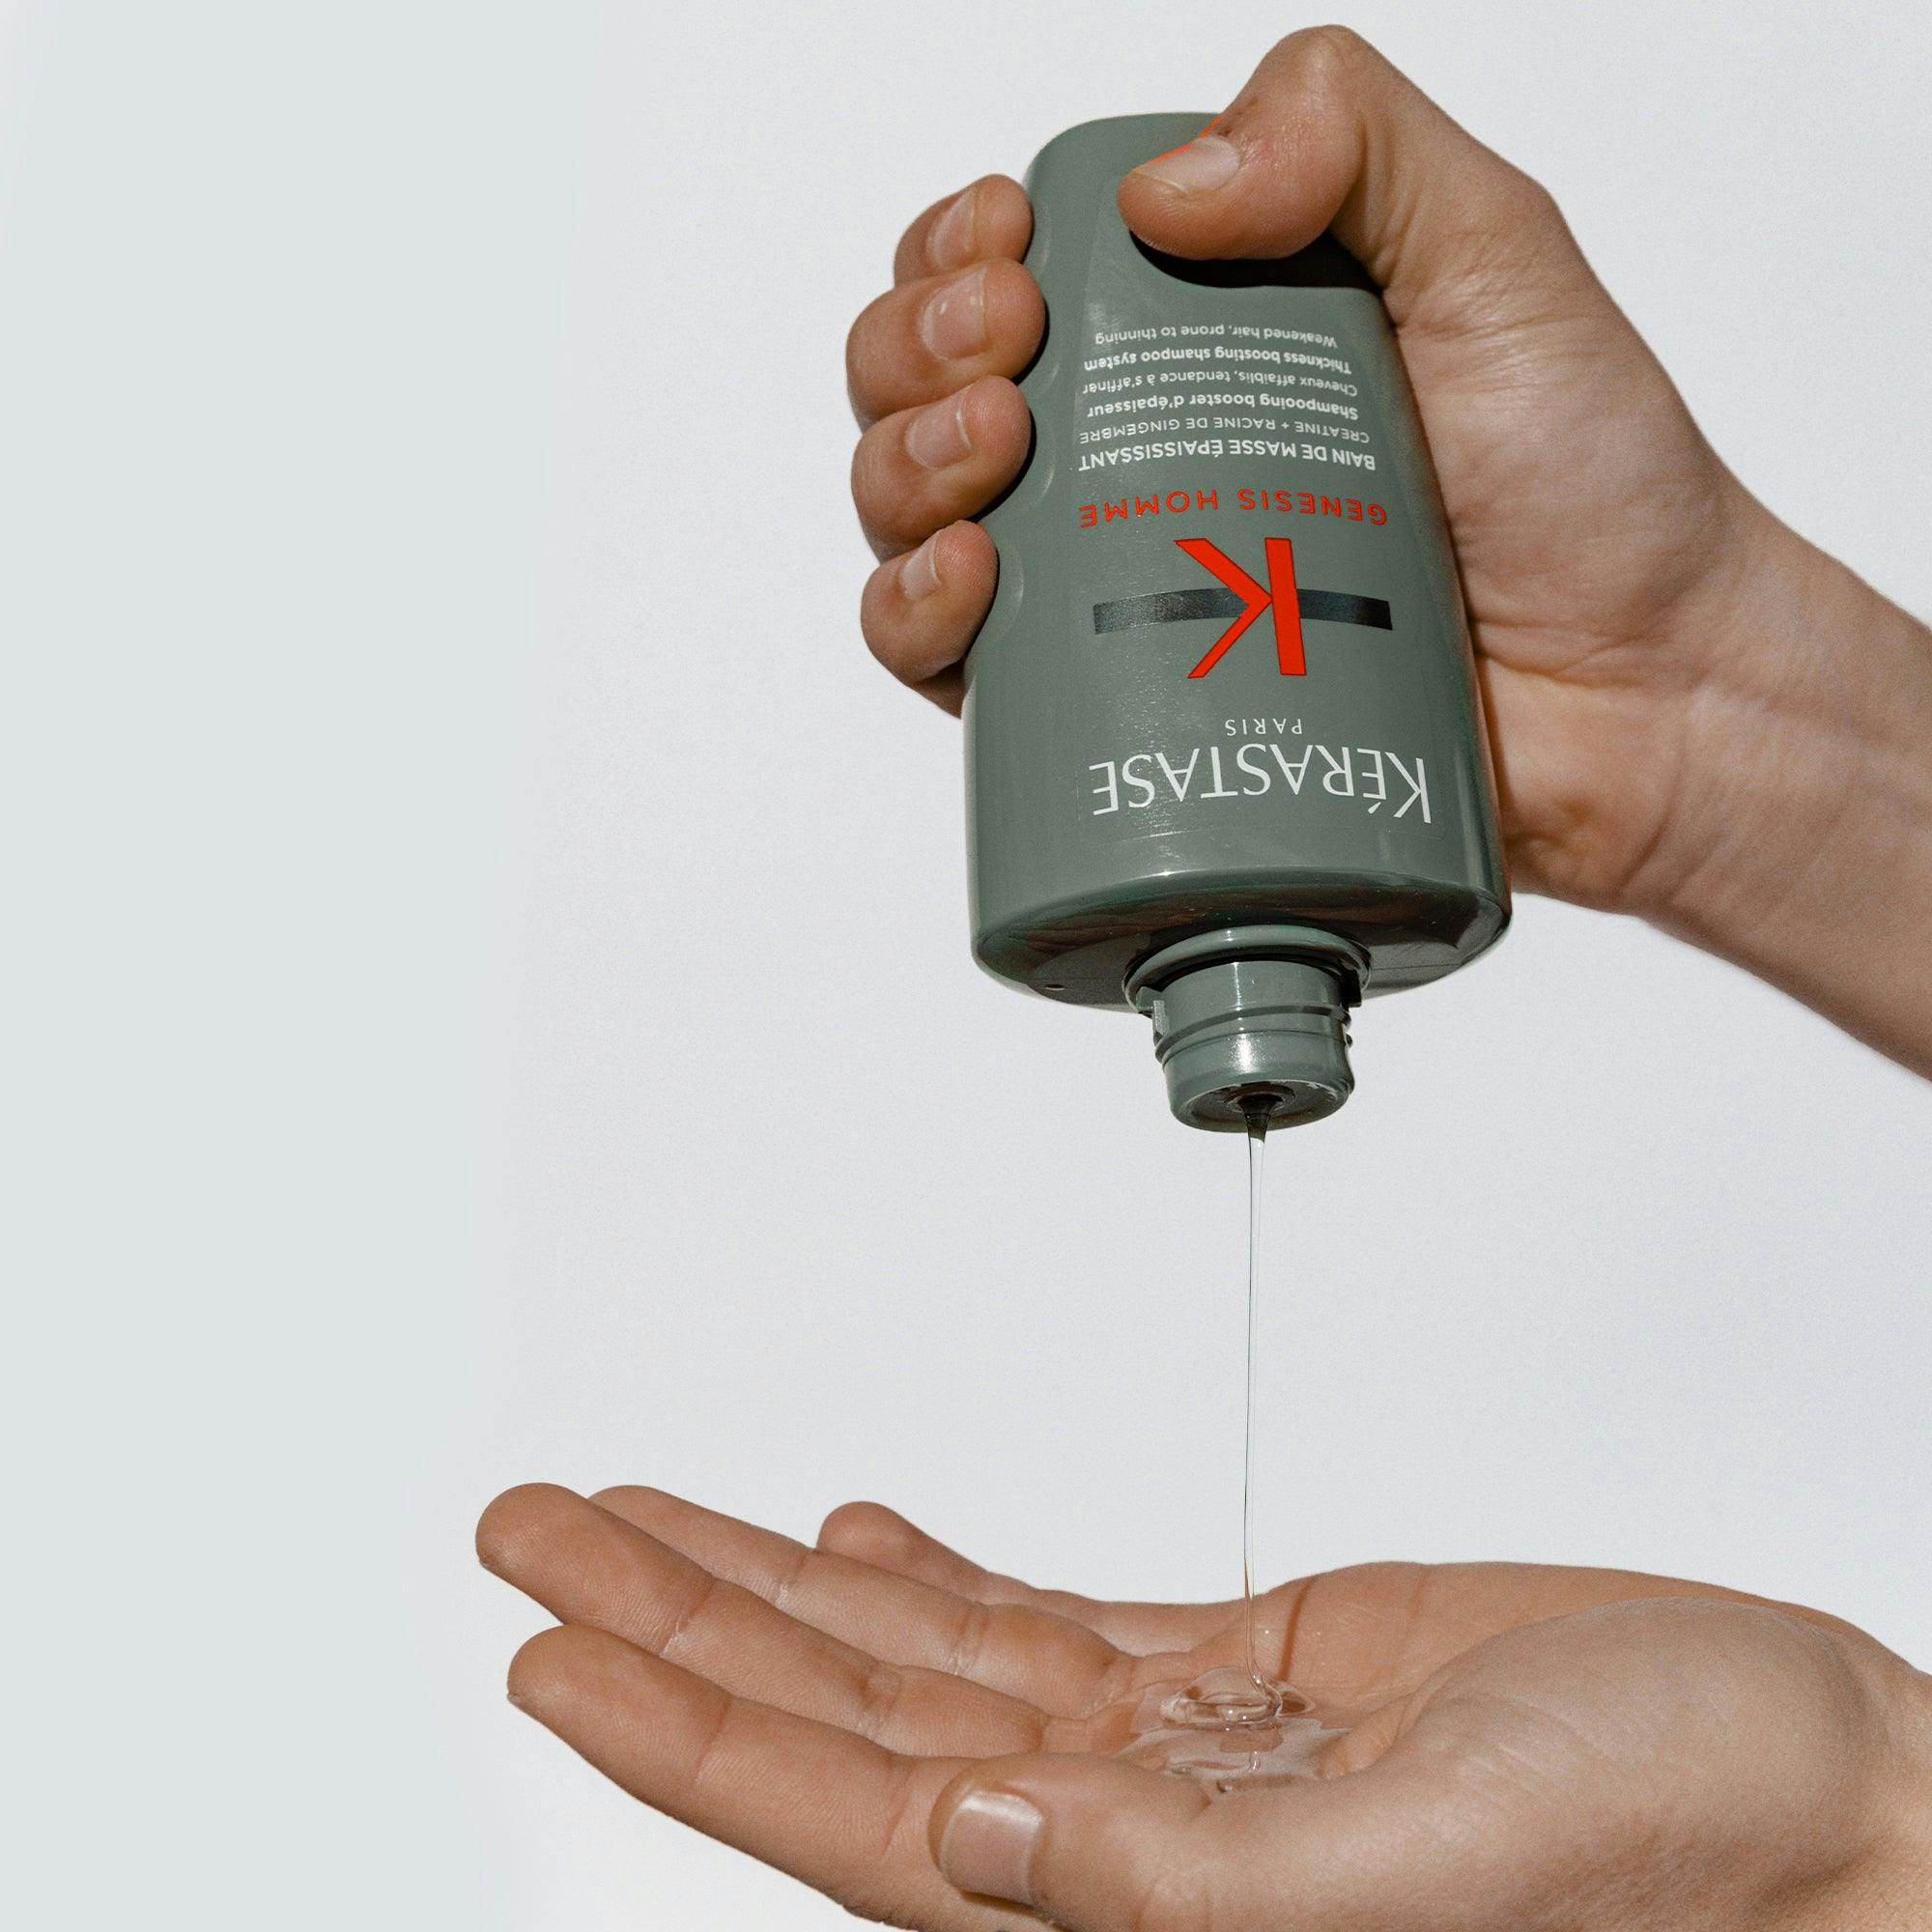 Kérastase Genesis Homme Thickening Boosting Shampoo 250ml